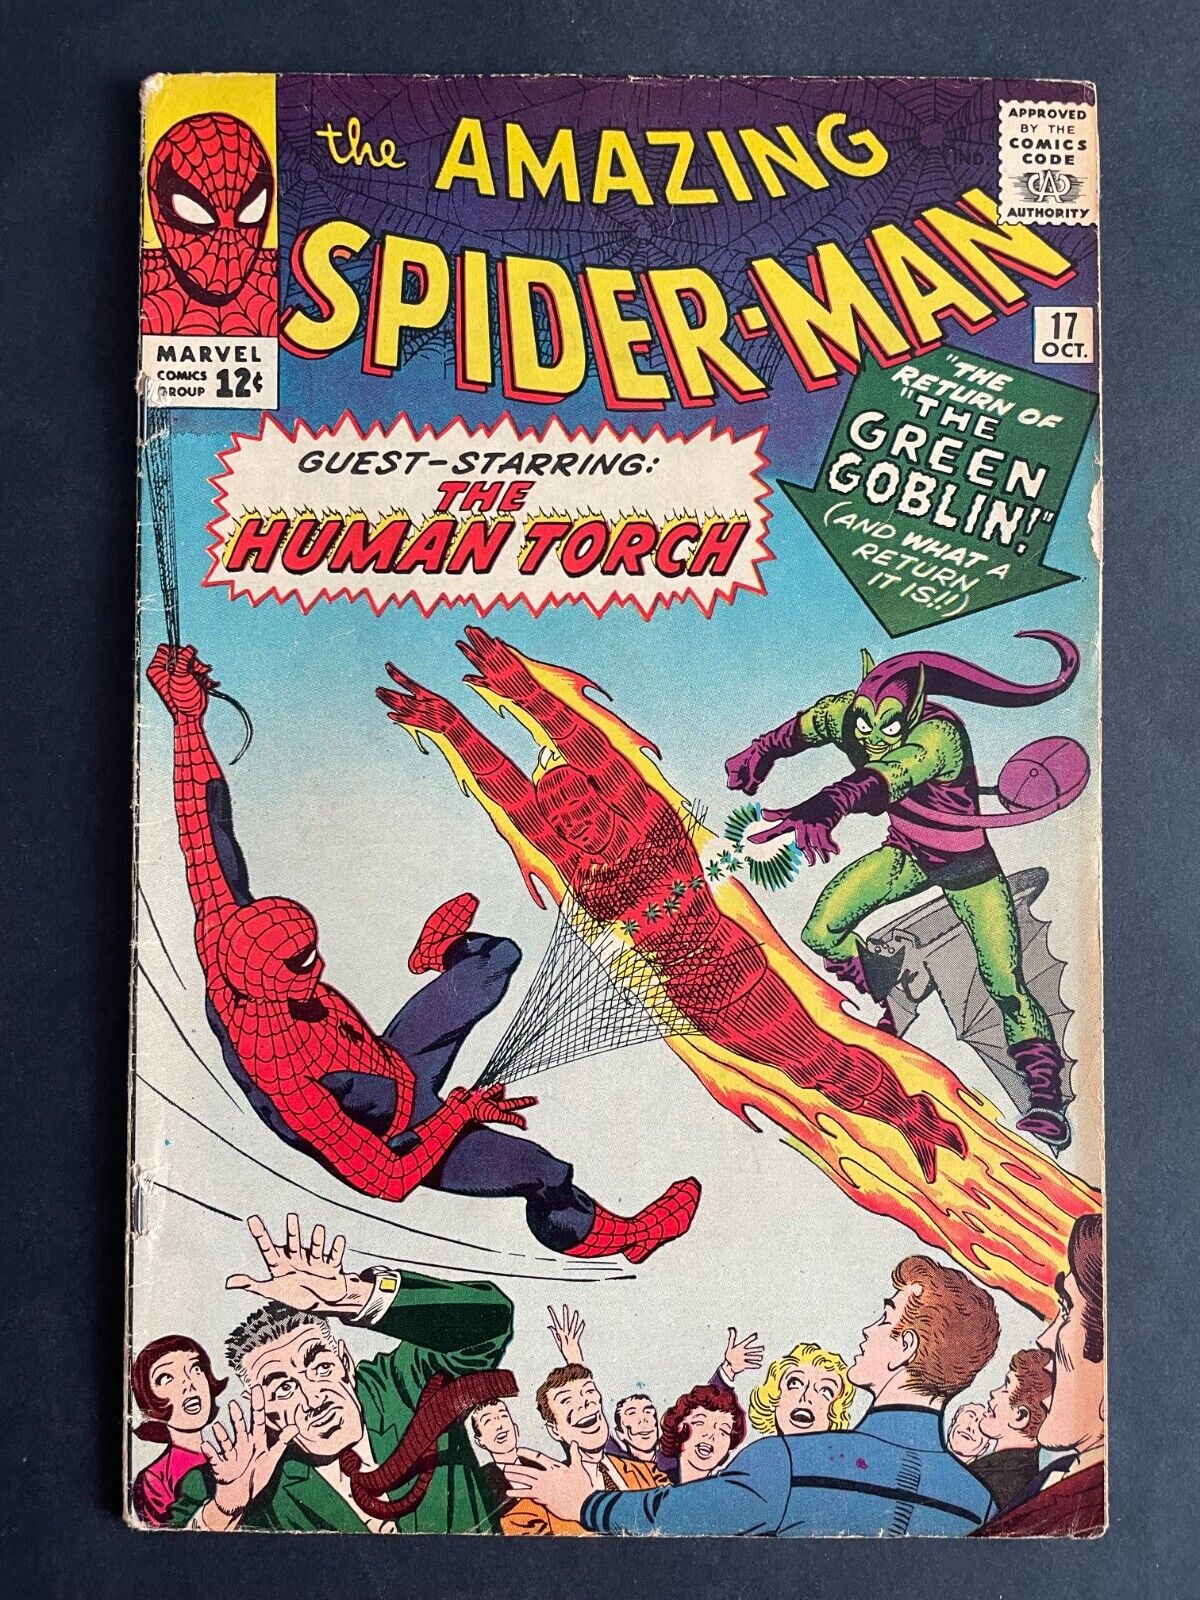 Amazing Spider-Man #17 - Green Goblin Marvel 1964 Comics